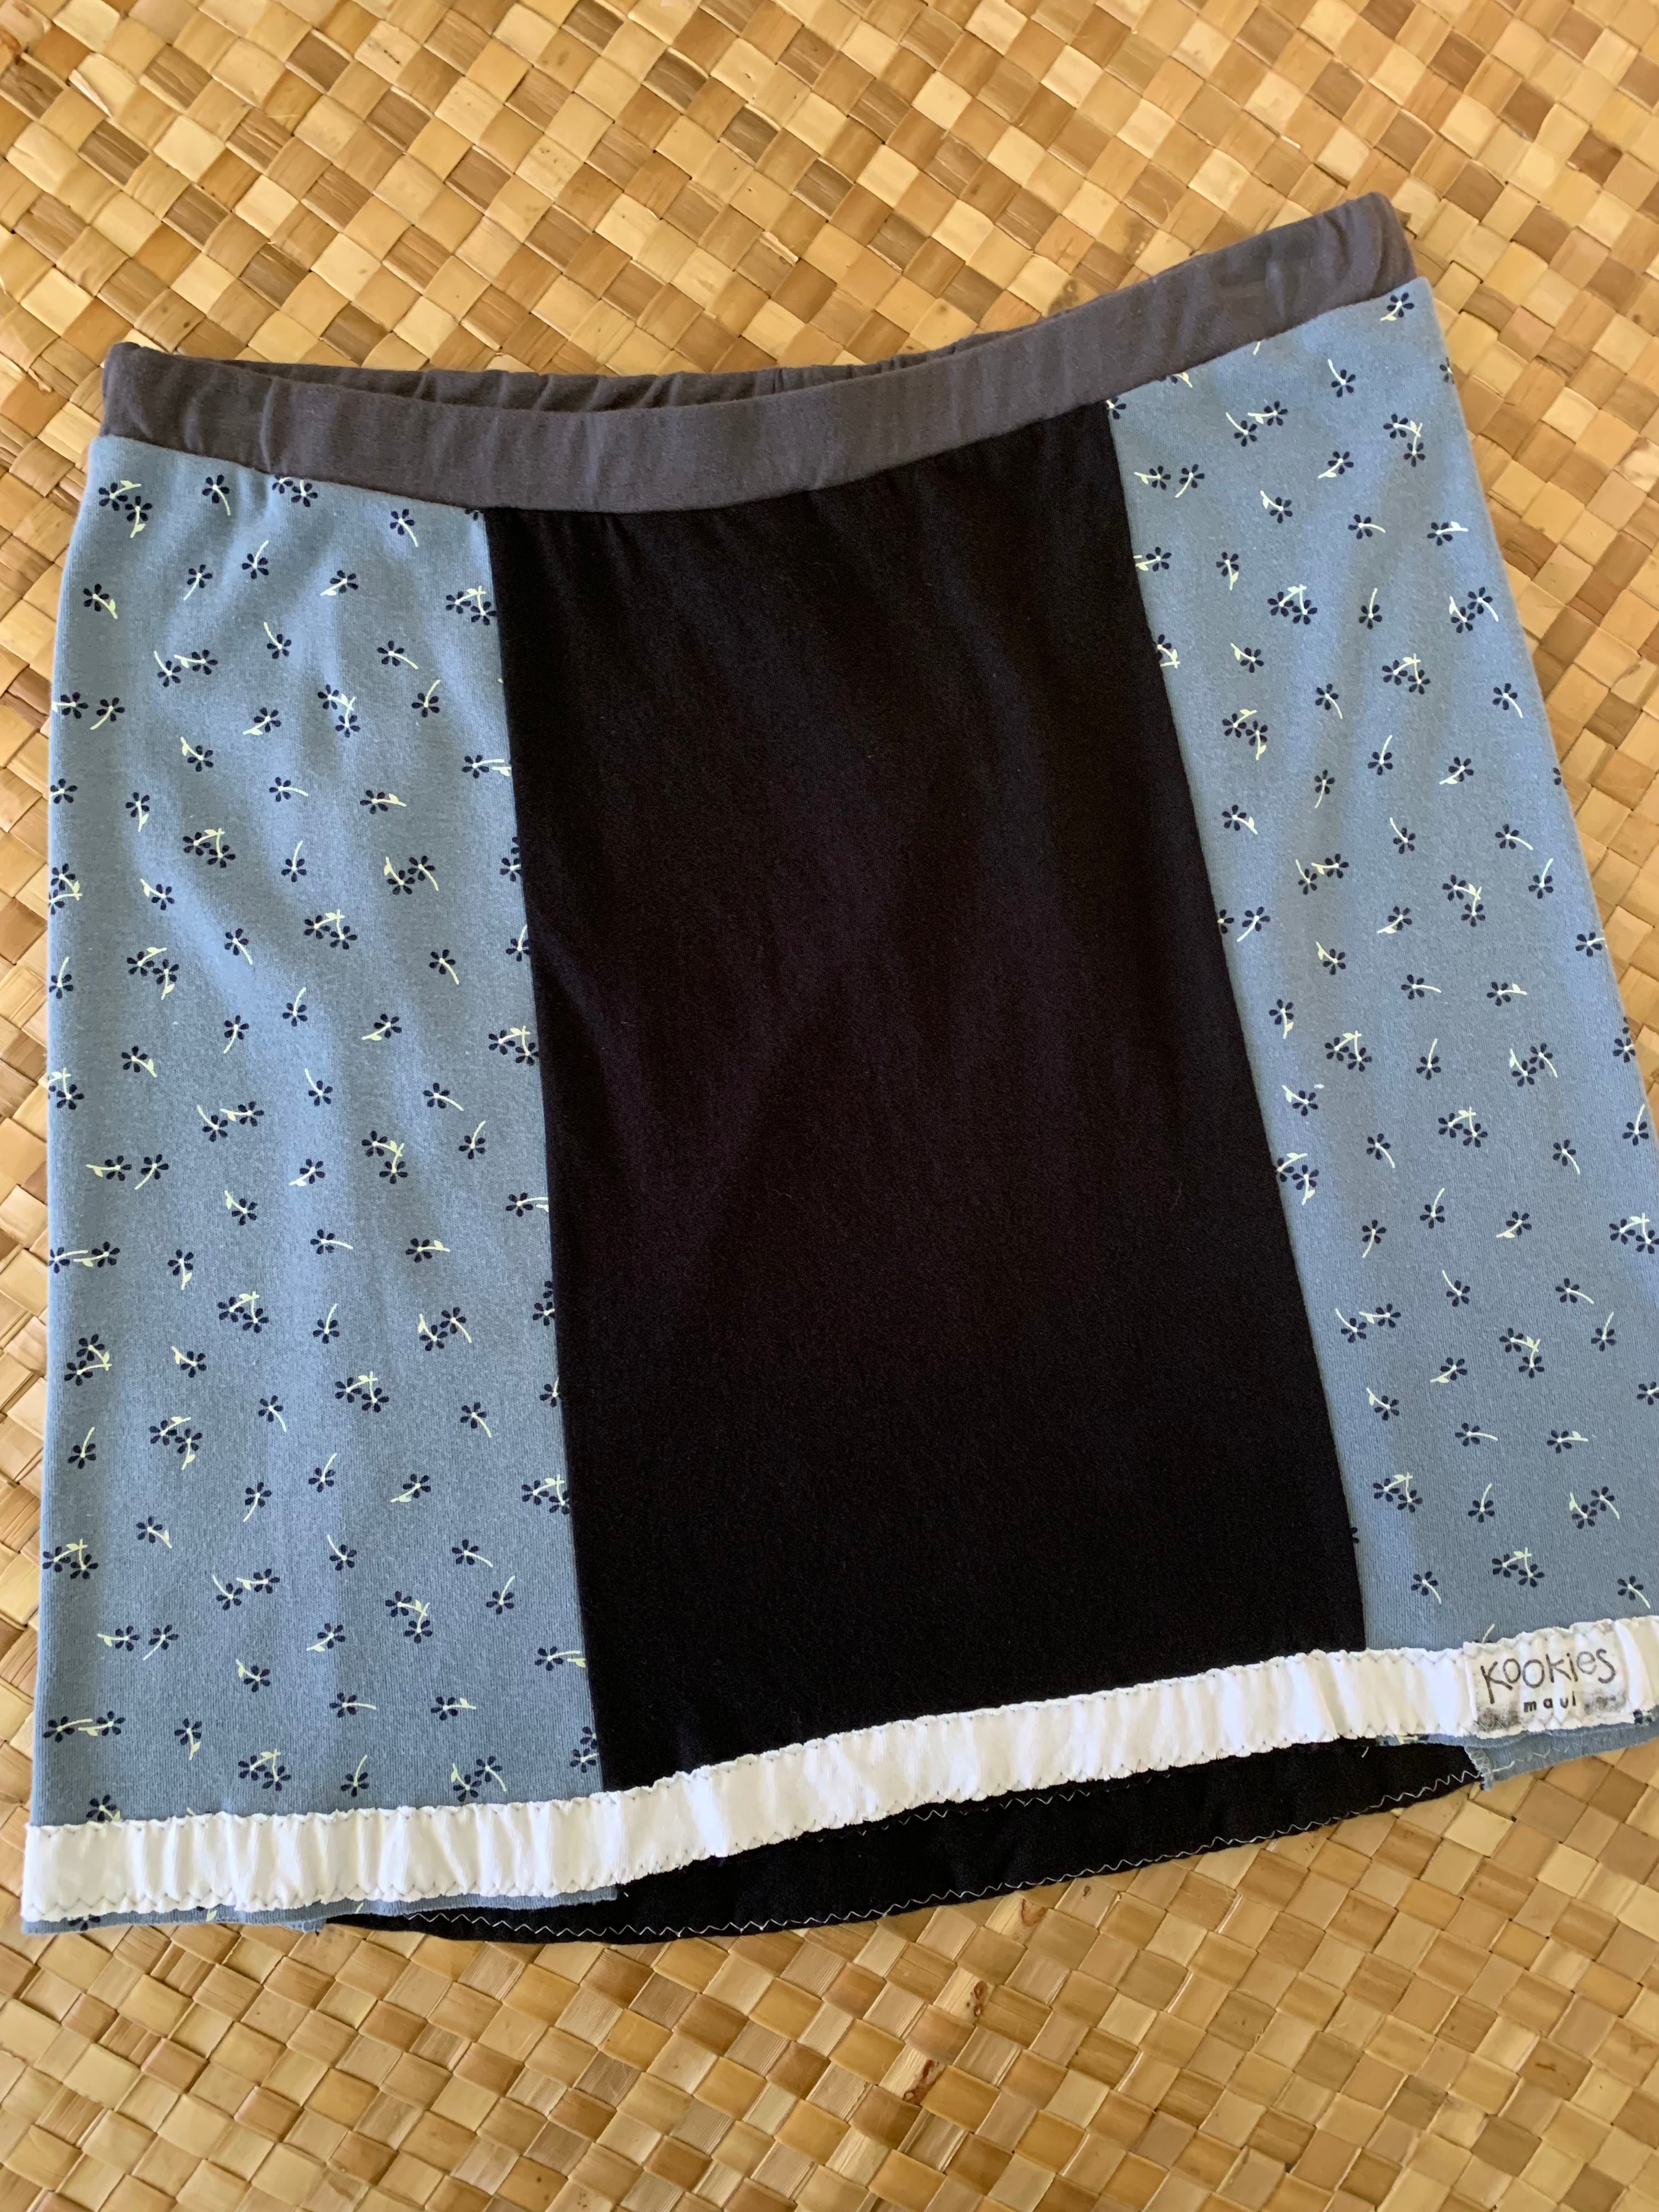 Ladies L "Black & Blue Floral Mahiʻai" Short Pencil Skirt